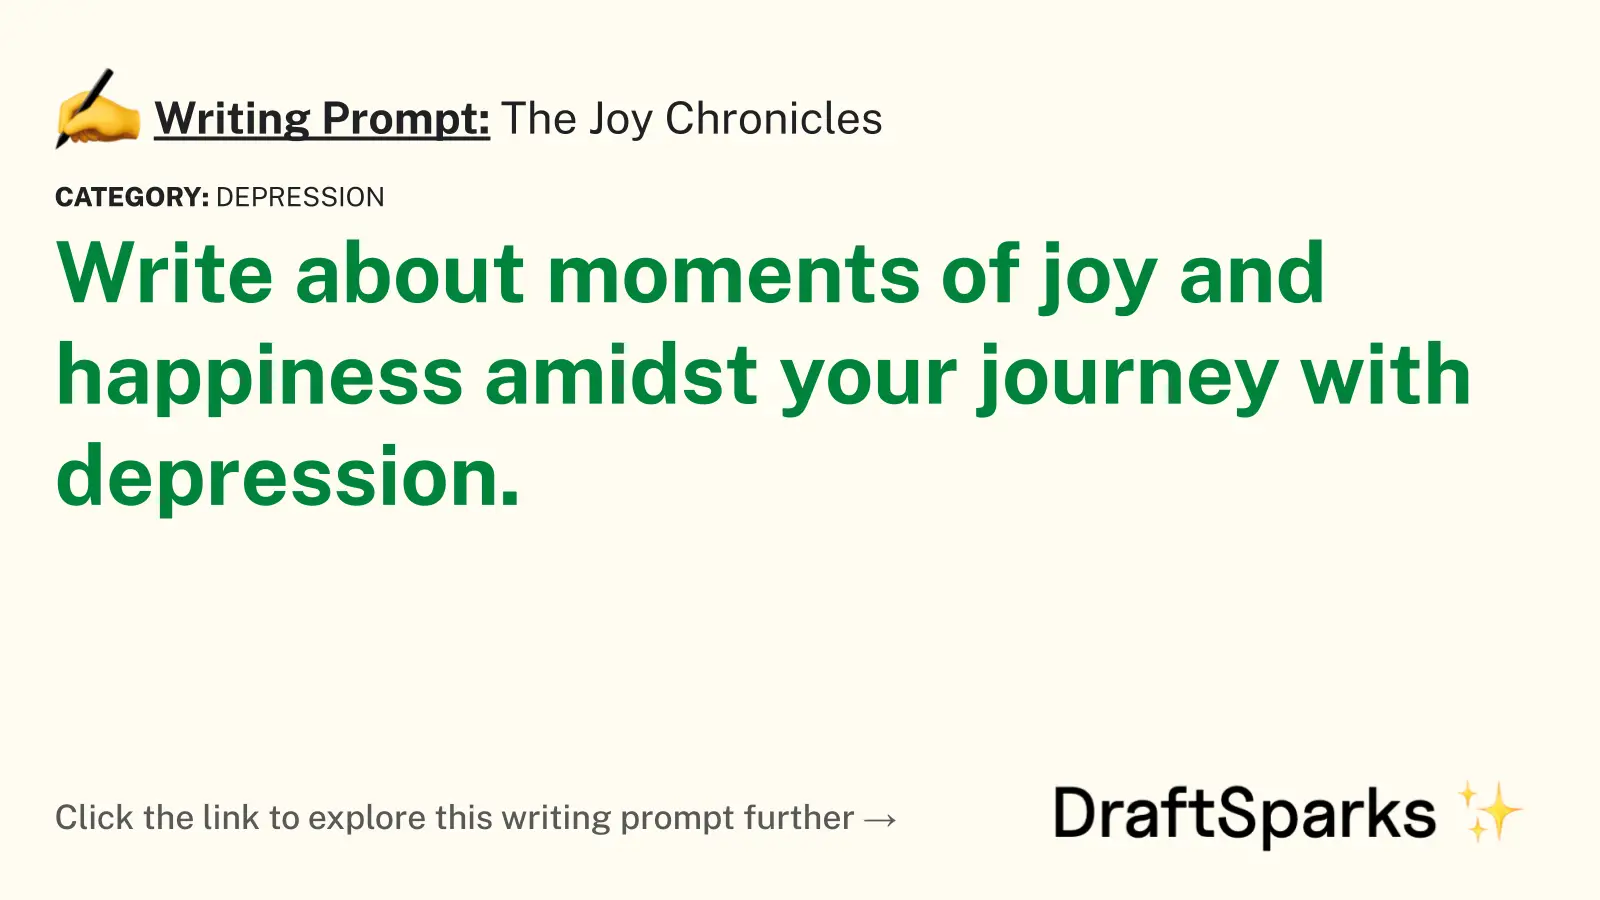 The Joy Chronicles